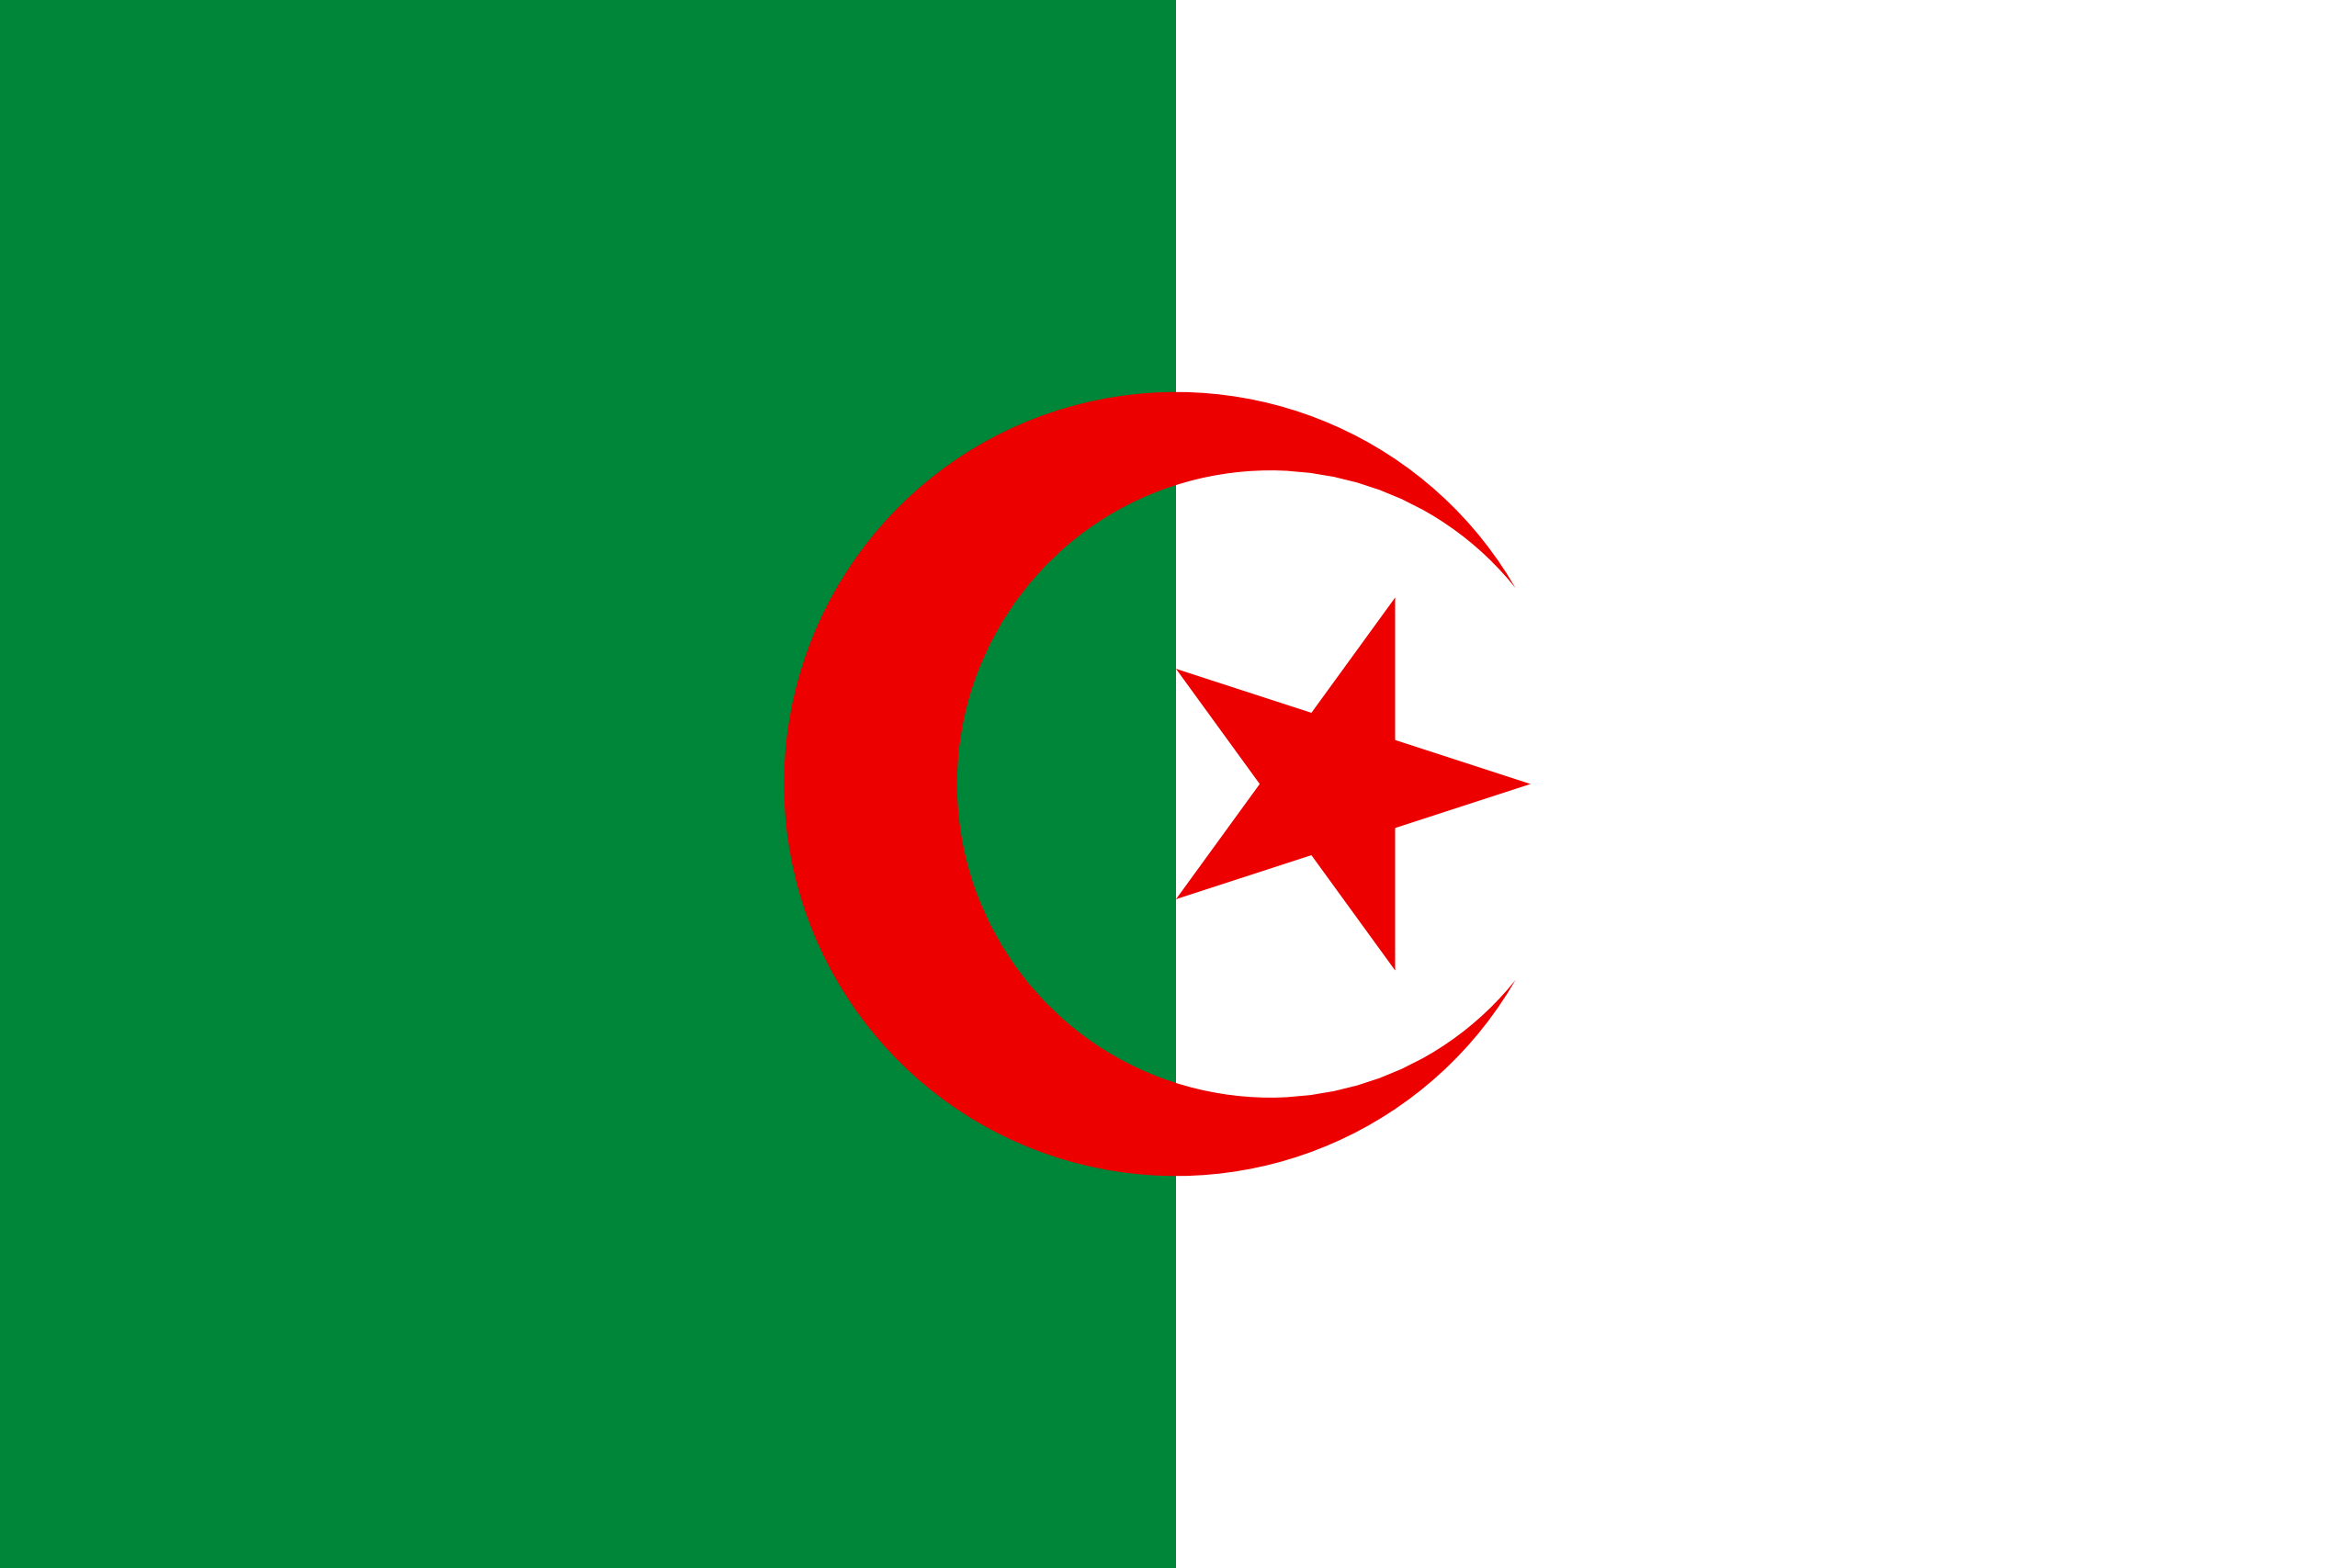 Algeria's flag